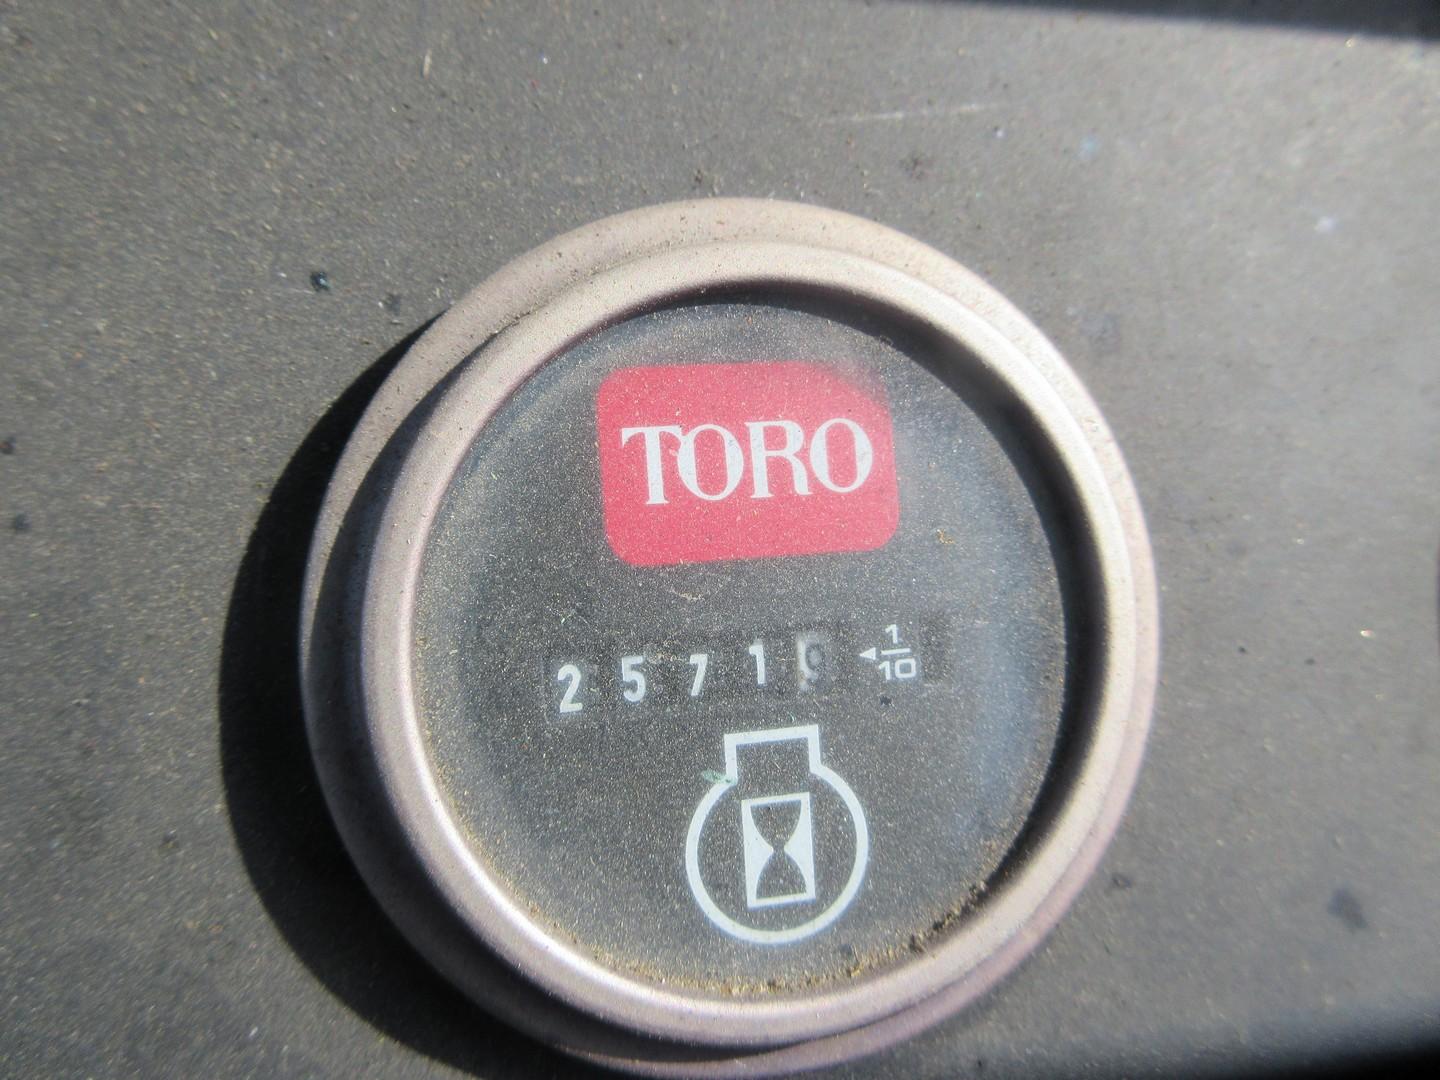 Toro Multi Pro 5600 Sprayer